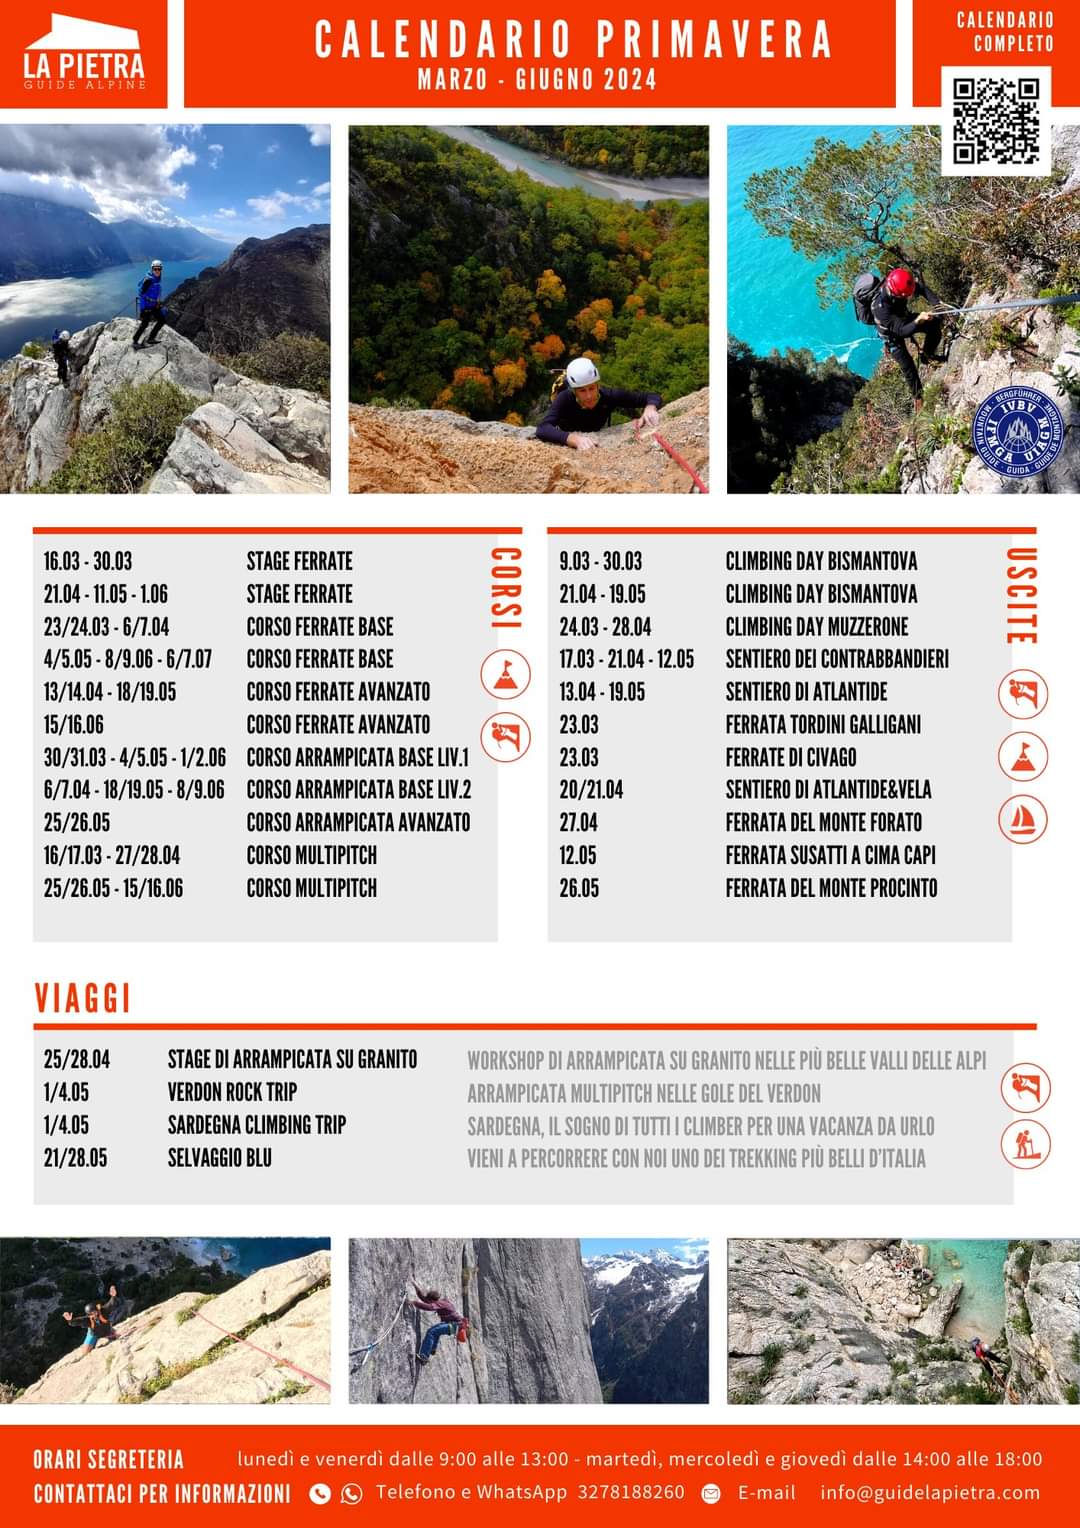 La Pietra Guide Alpine Primavera 2024